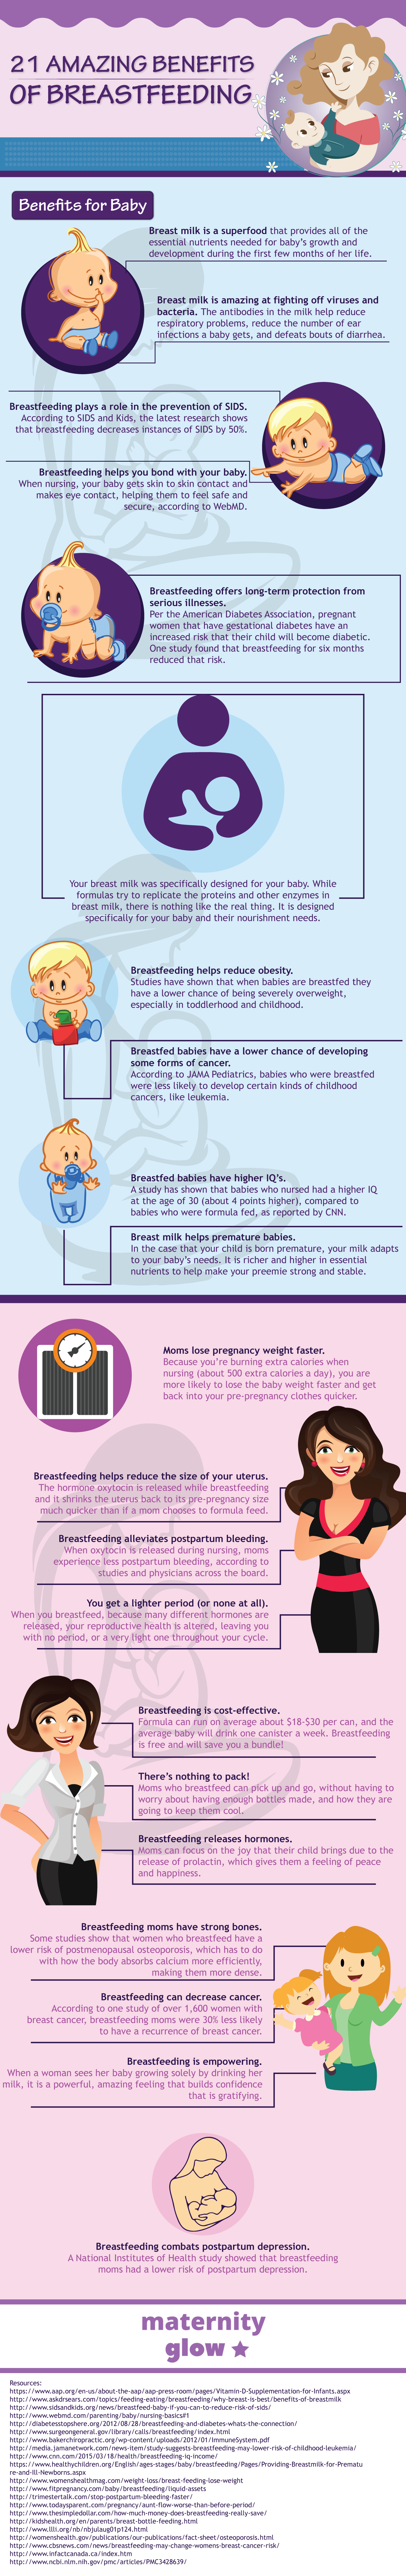 21 Amazing Benefits of Breastfeeding